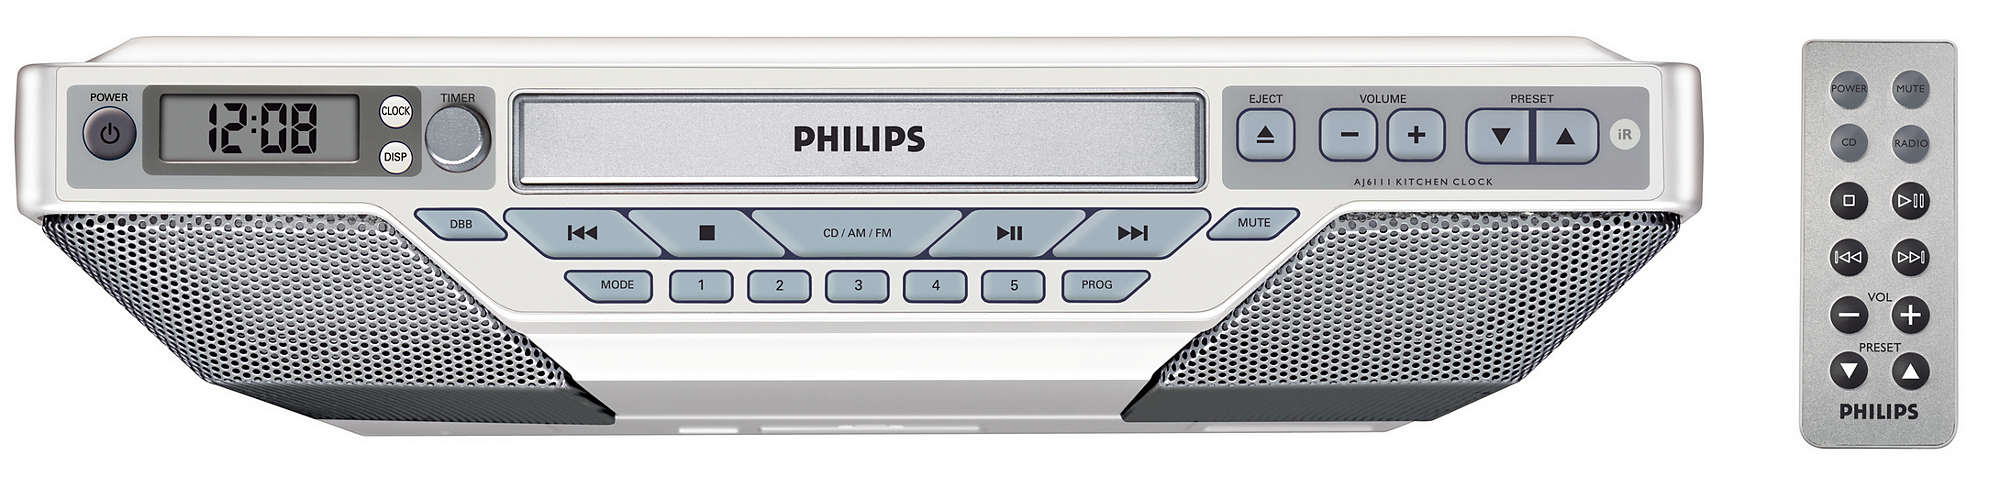 Kitchen Clock Radio AJ6111/37 | Philips Slim design, fits anywhere